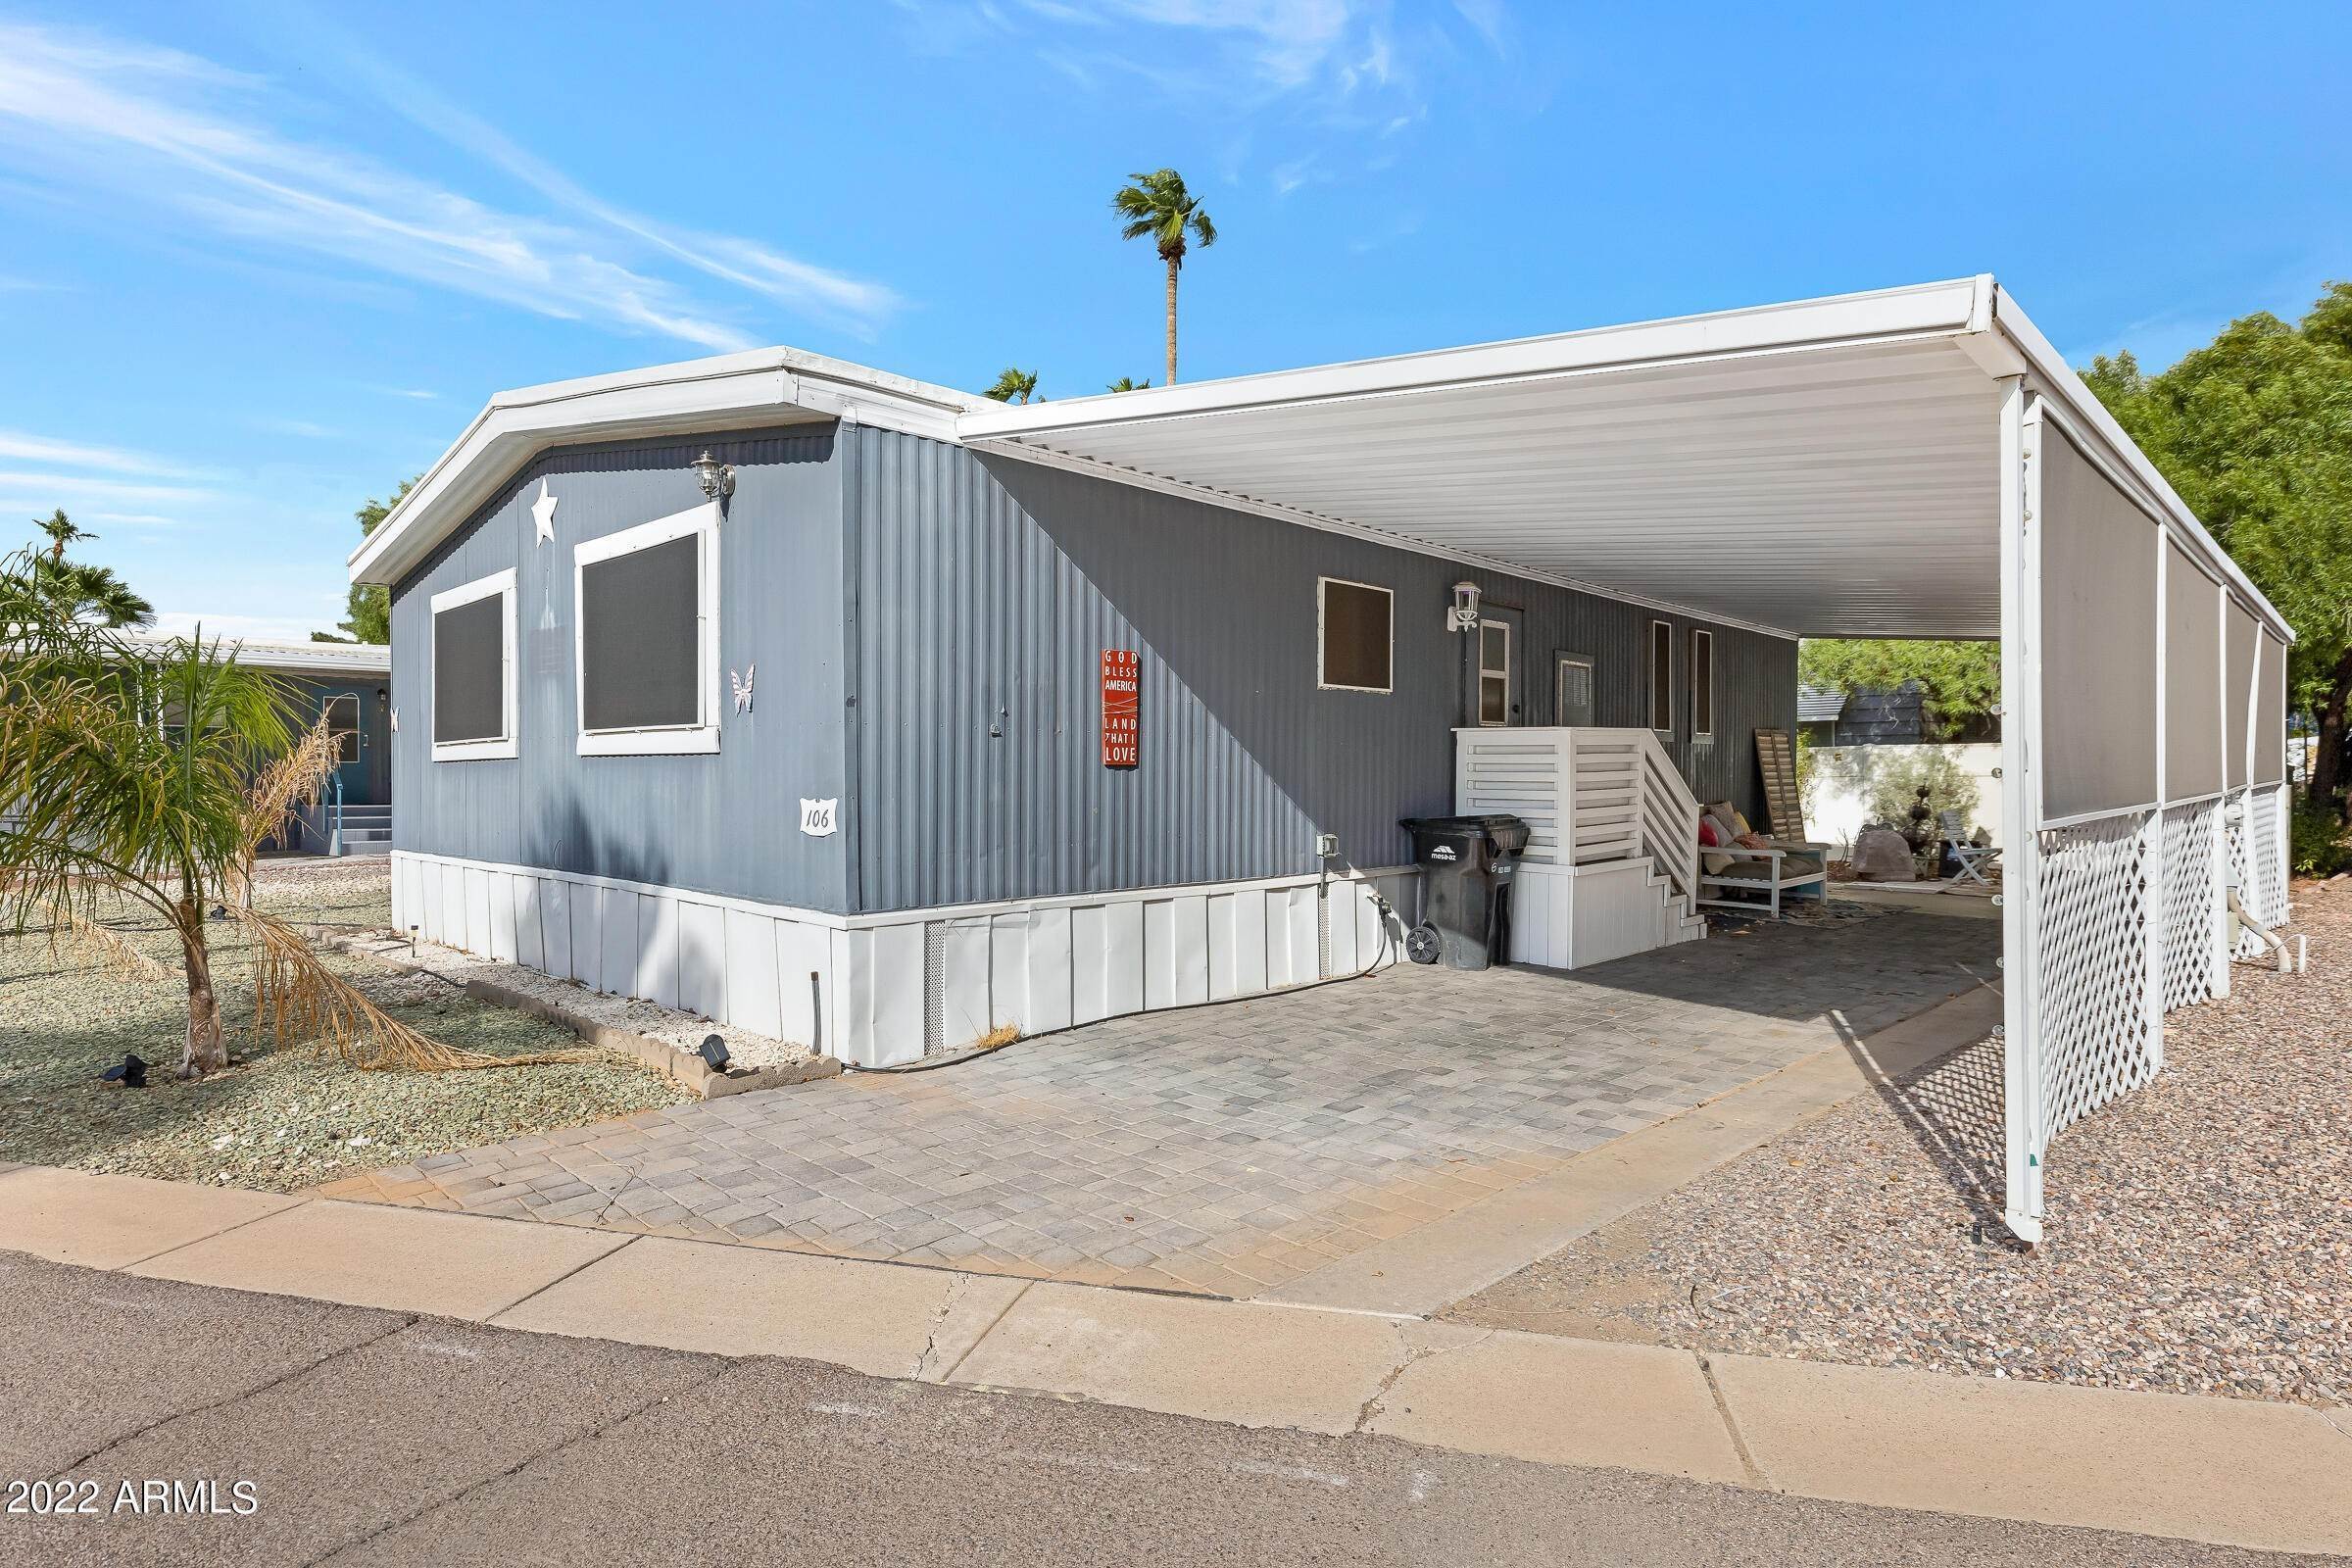 18. Mobile Home for Sale at Mesa, AZ 85206